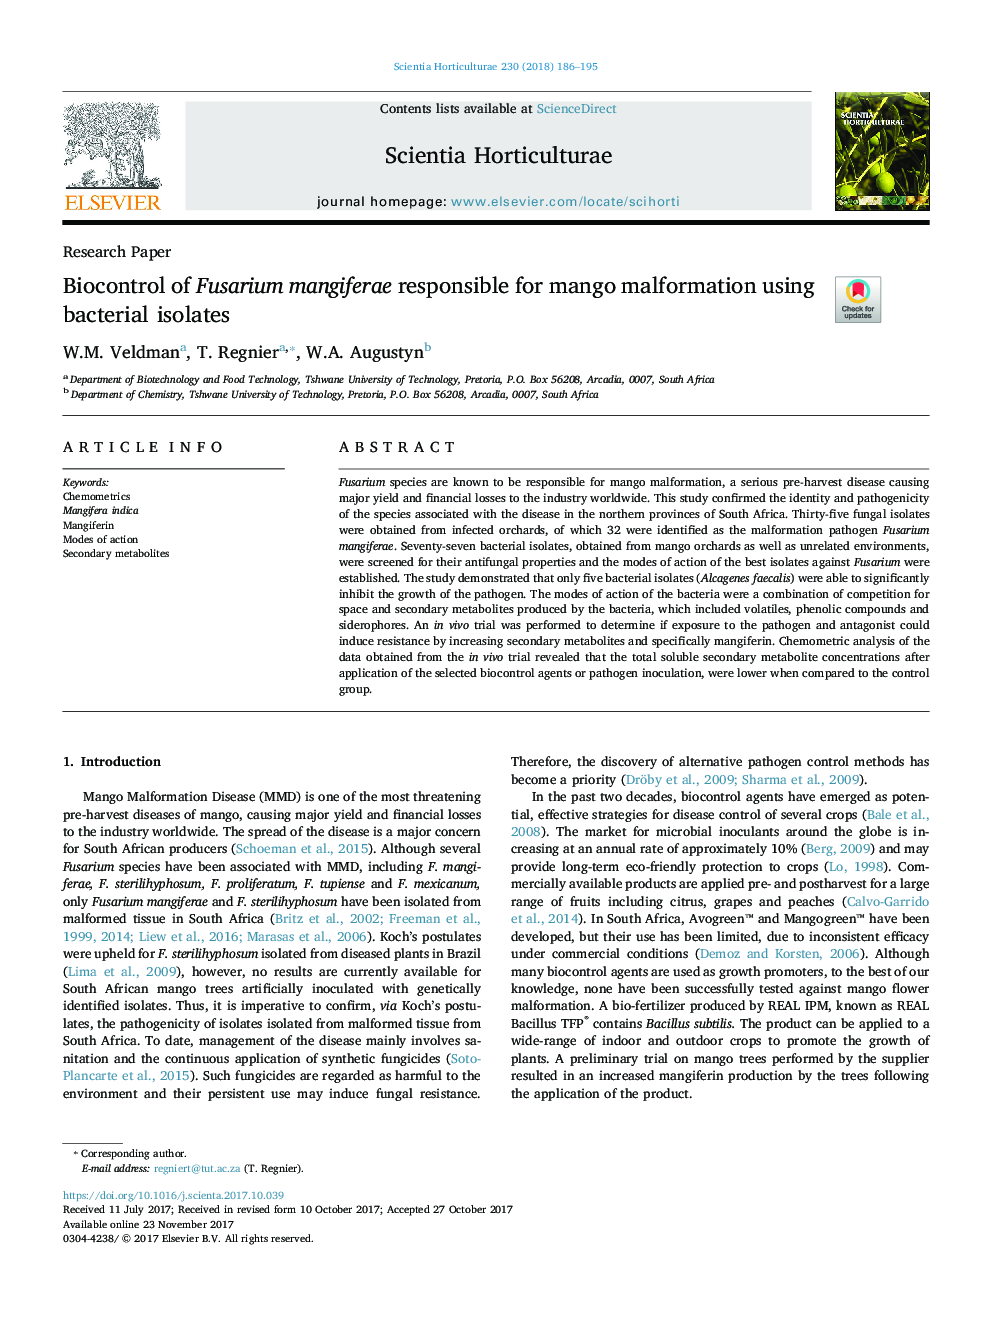 Biocontrol of Fusarium mangiferae responsible for mango malformation using bacterial isolates